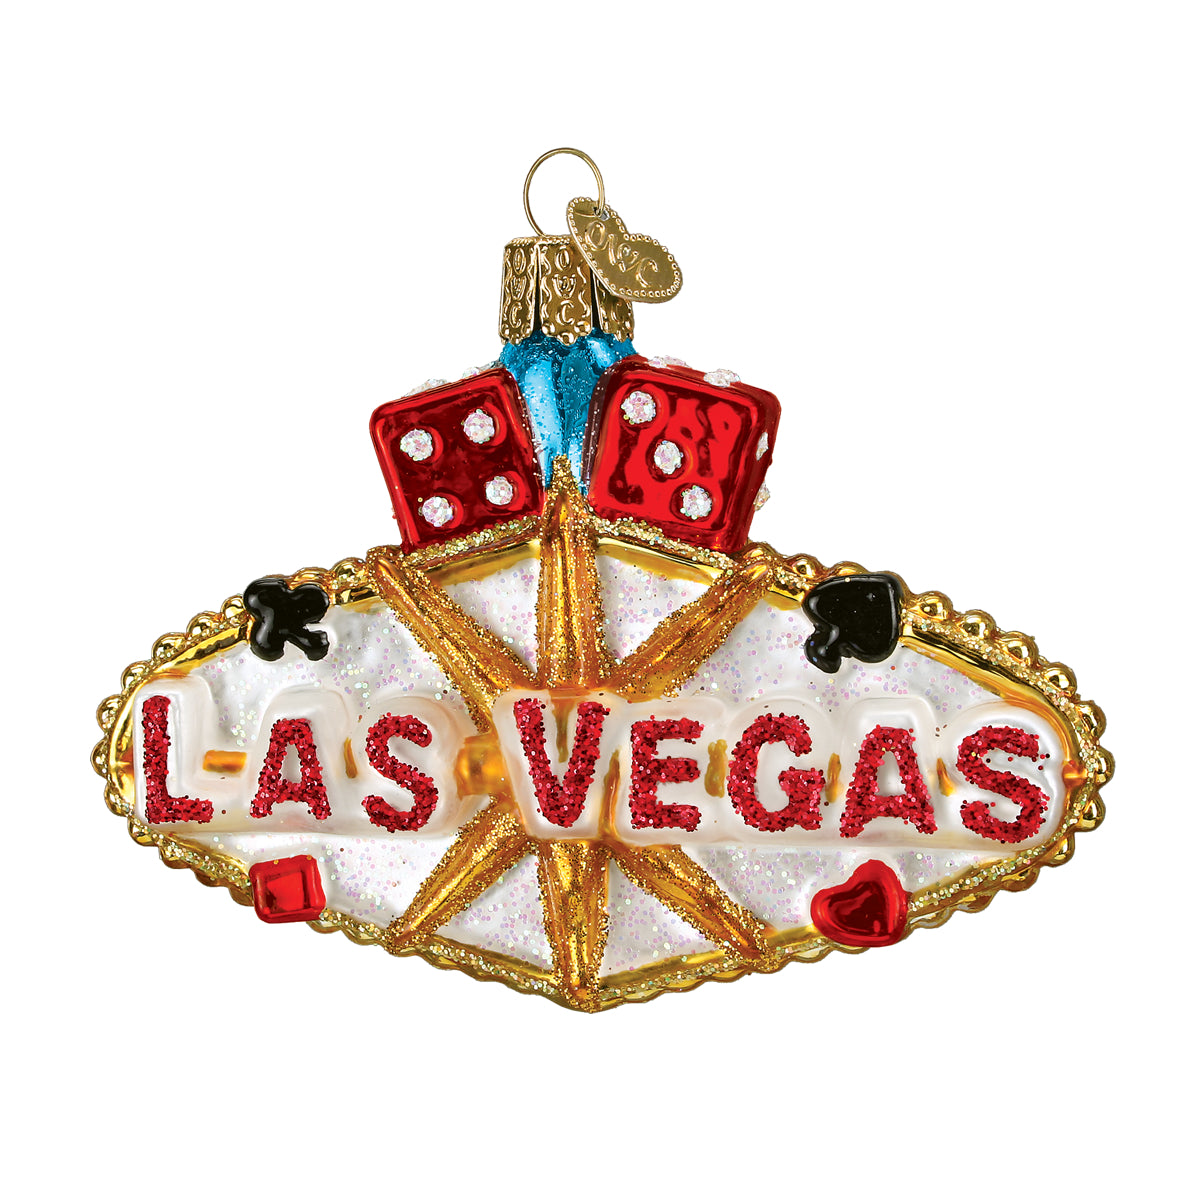 Las Vegas Sign Ornament